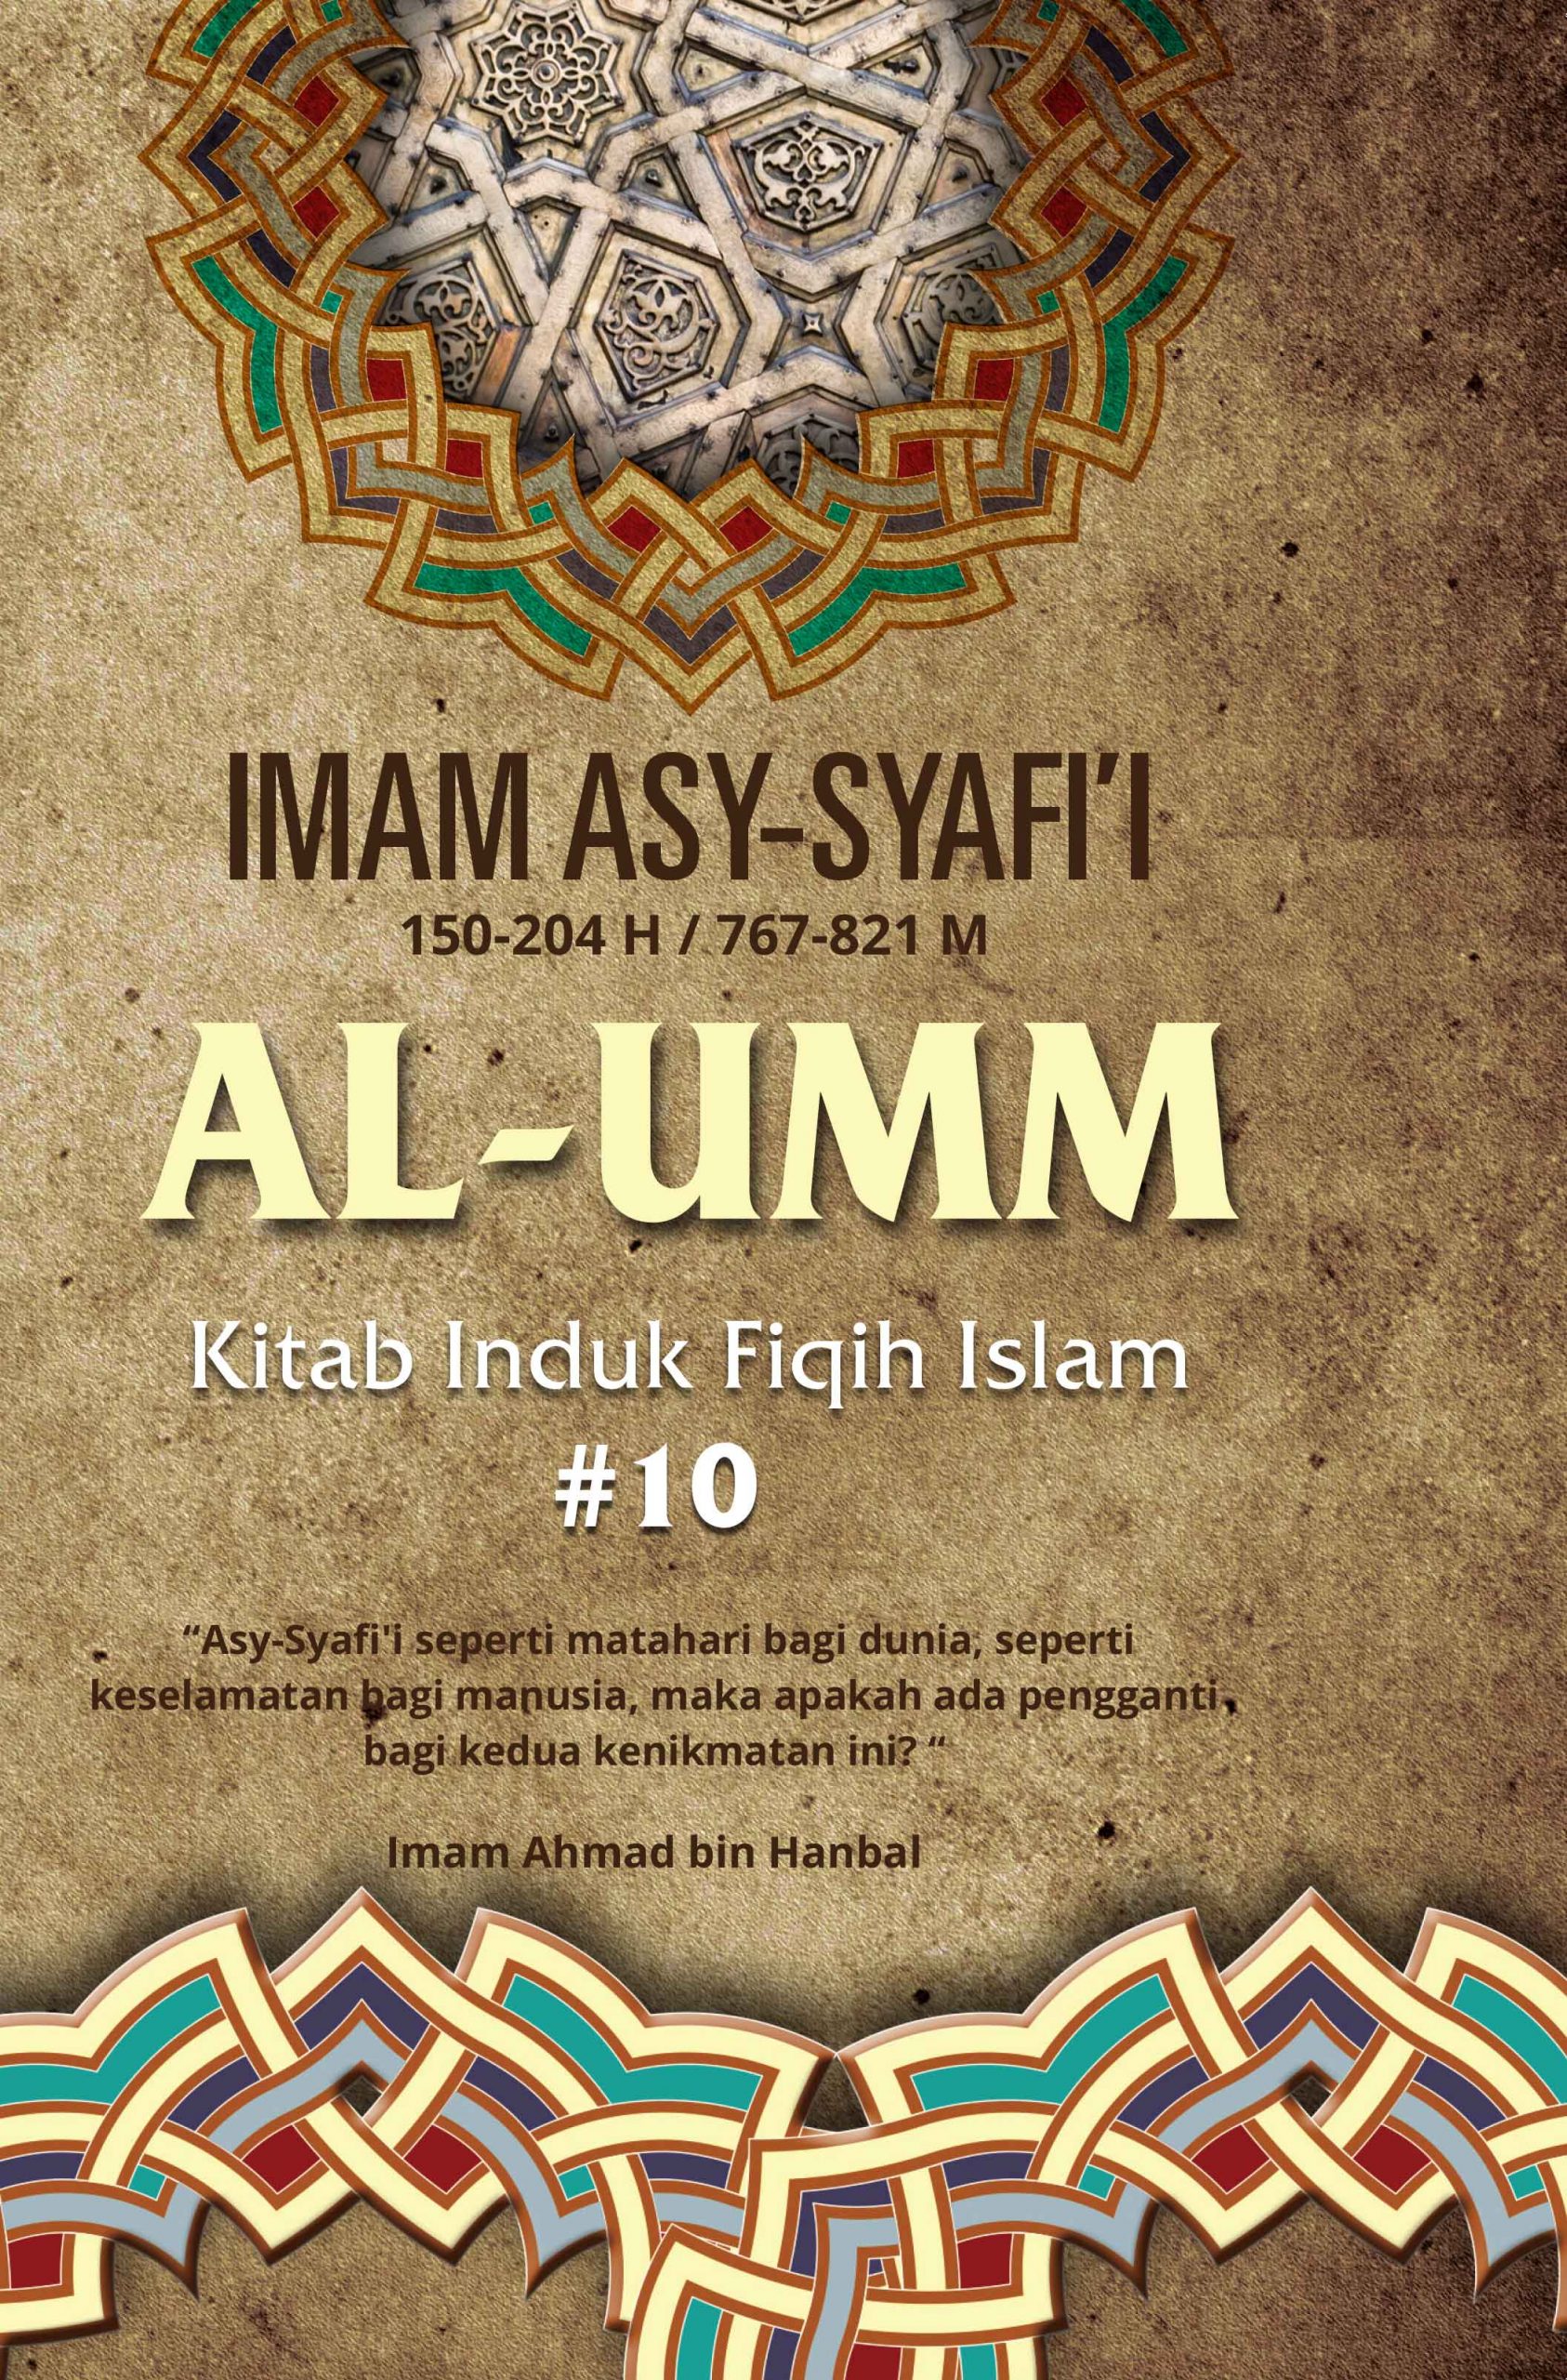 Buku Referensi Agama karya Imam asy Syafi’i-al-Umm #10: Kitab Induk Fiqih Islam Mazhab Syafi’i